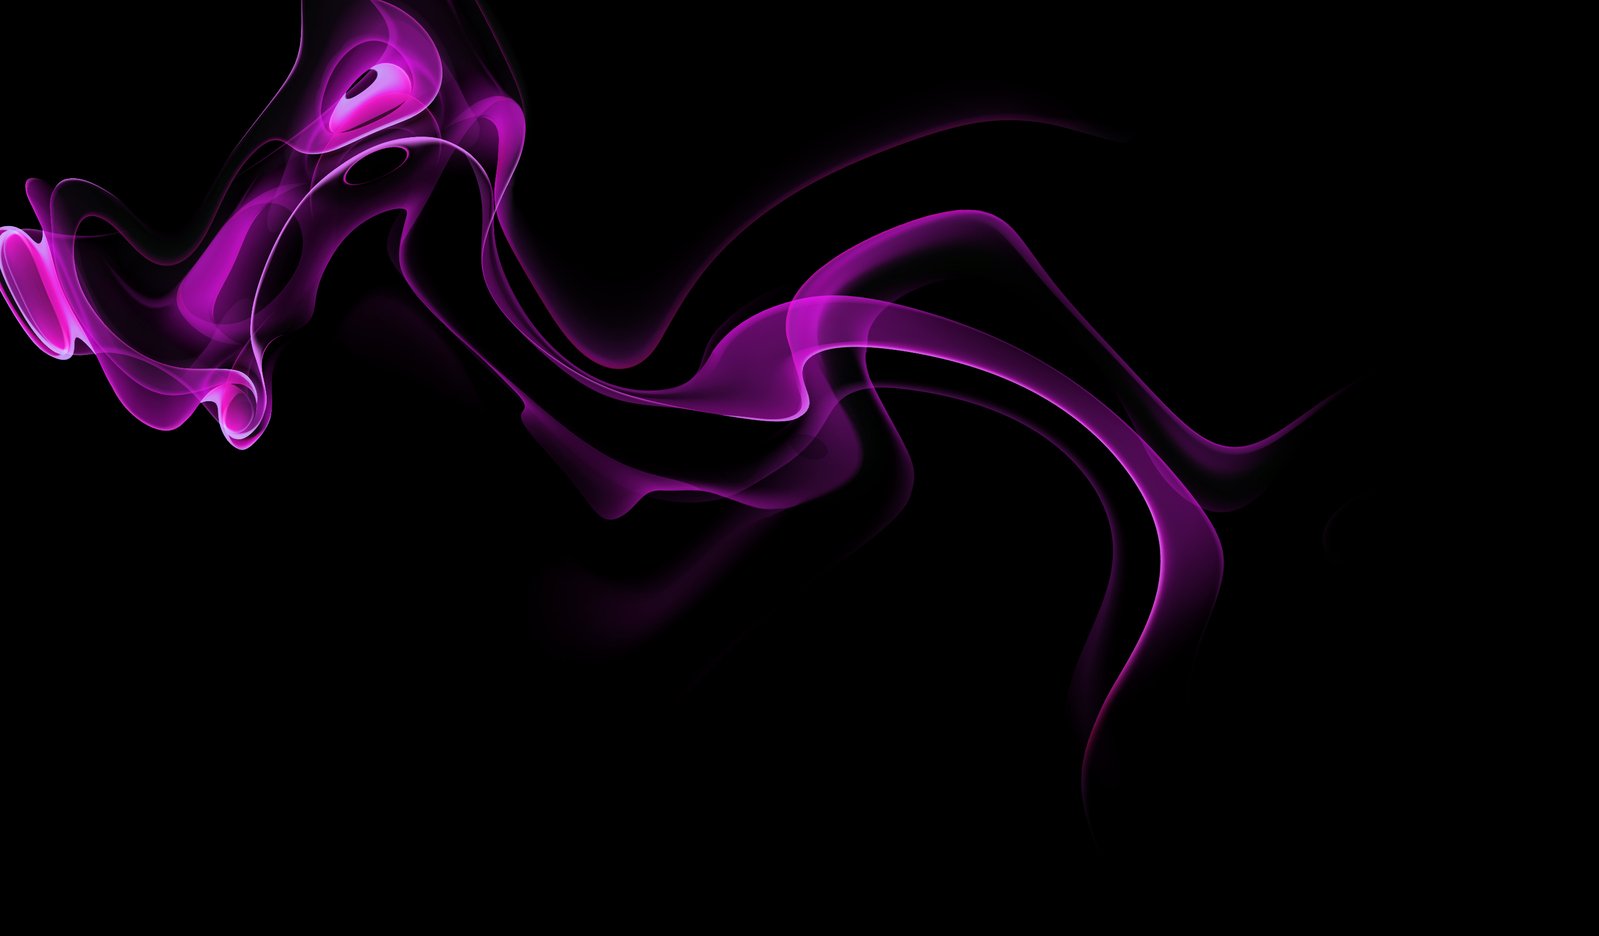 purple smoke on a black background with a black back ground